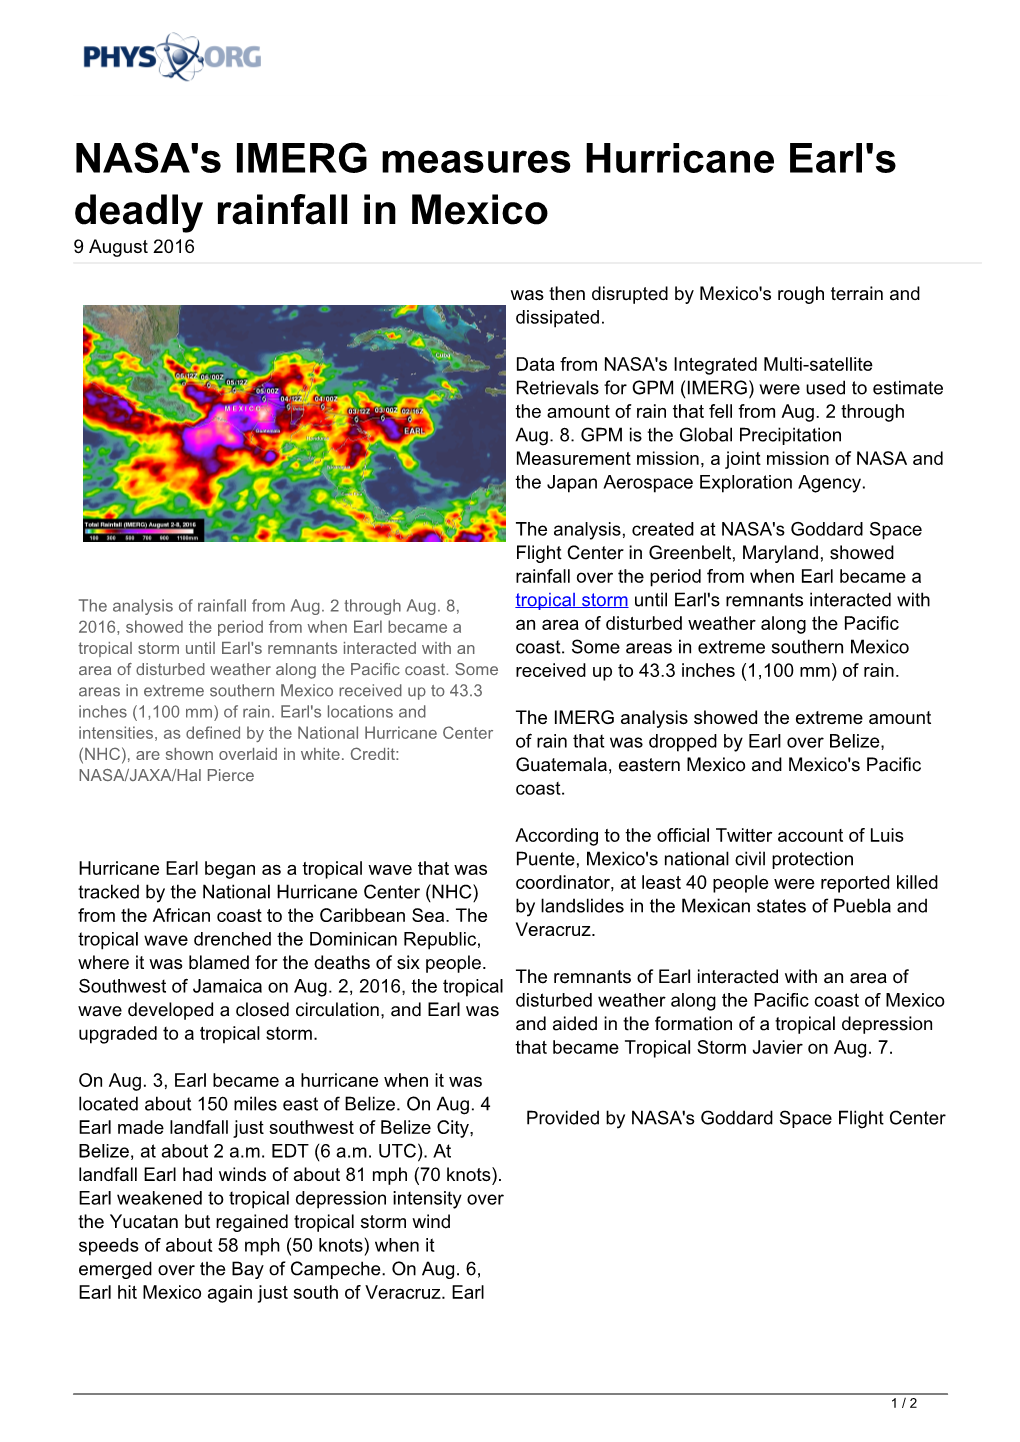 NASA's IMERG Measures Hurricane Earl's Deadly Rainfall in Mexico 9 August 2016